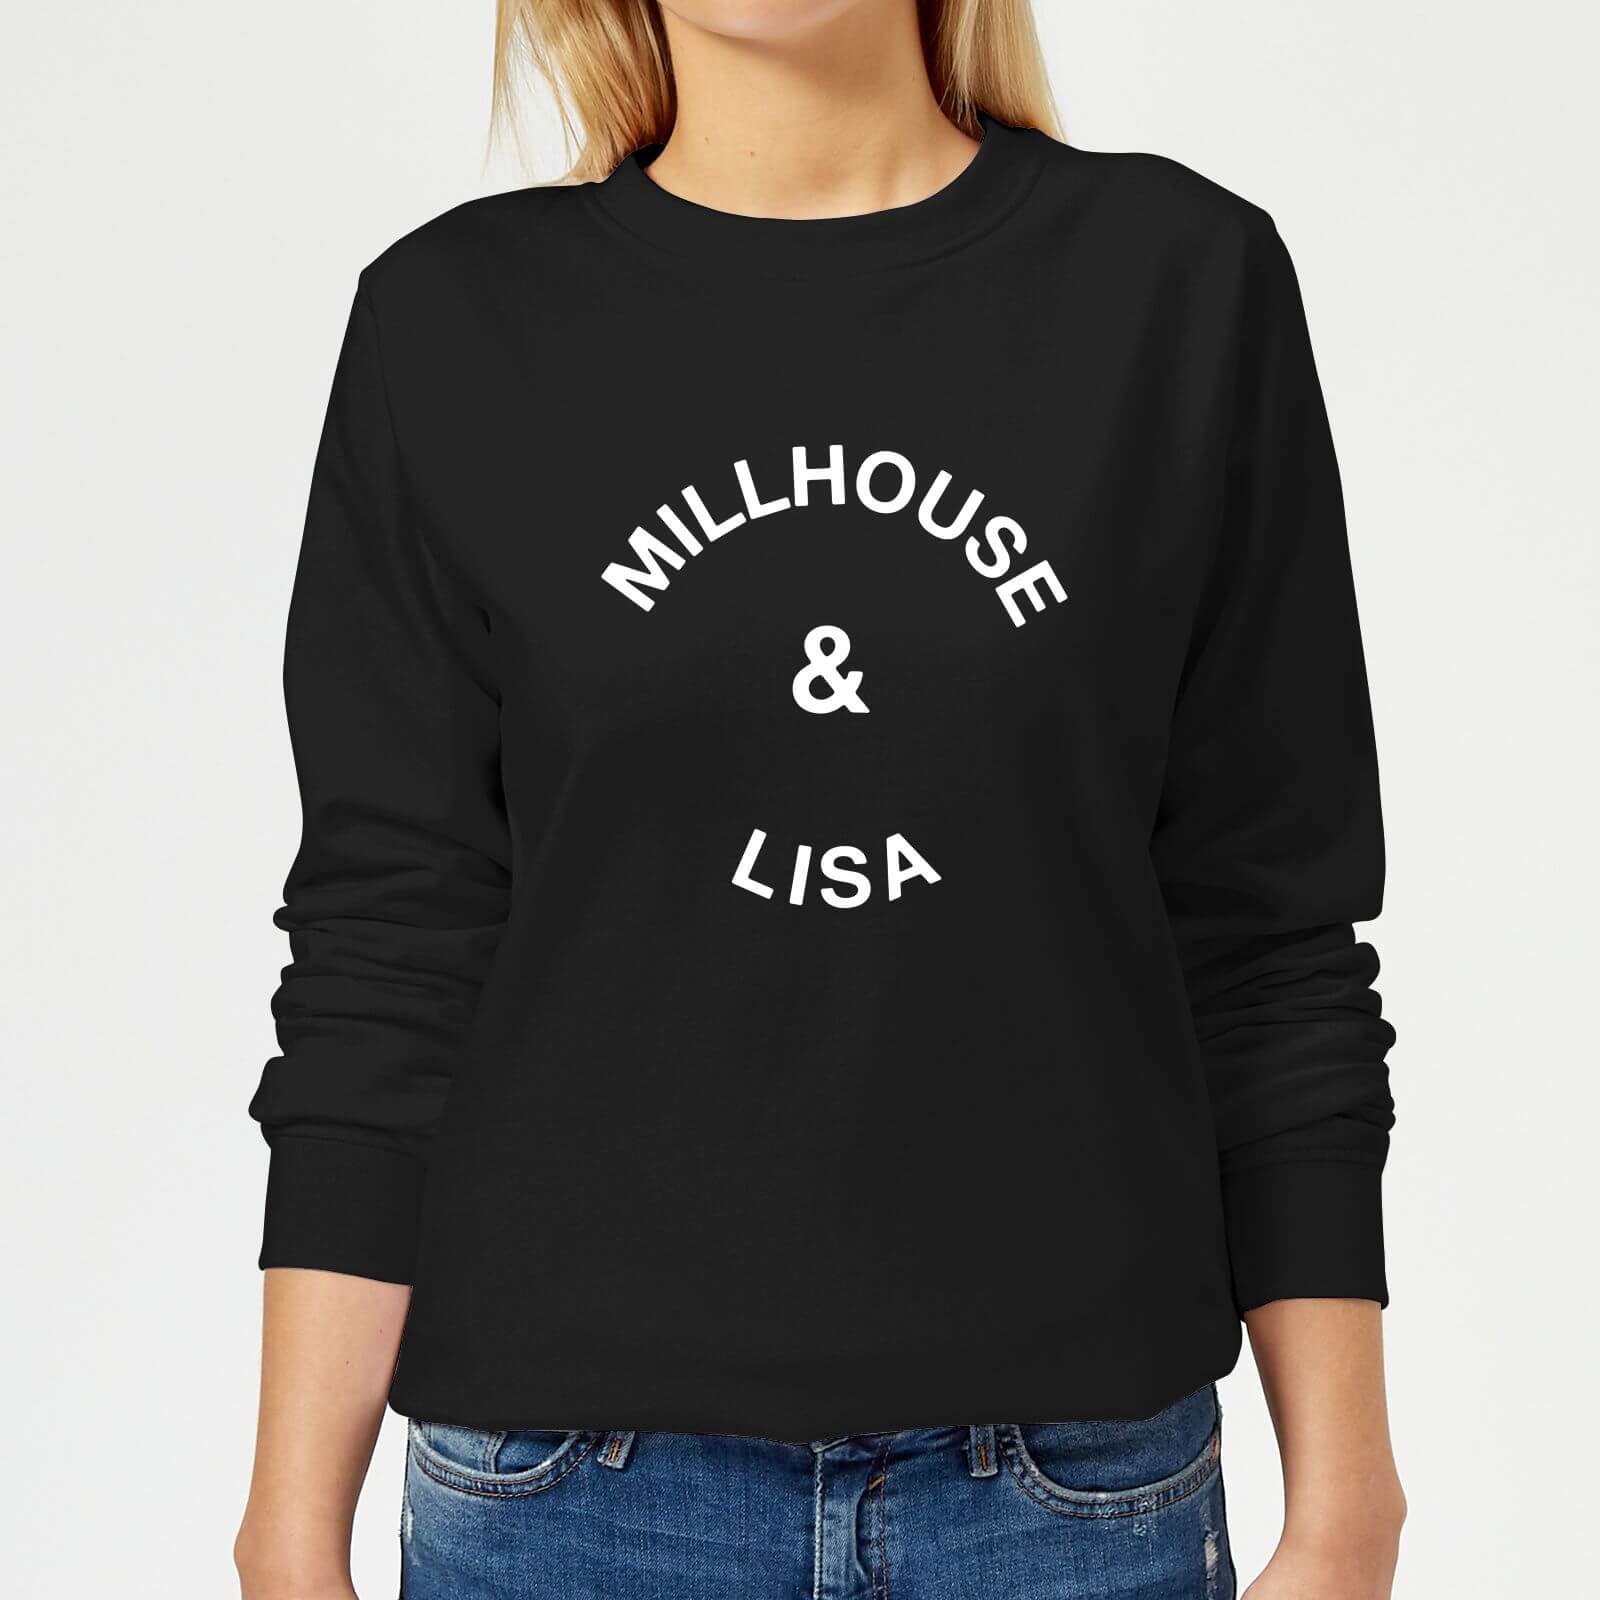 Millhouse & Lisa Women's Sweatshirt - Black - XXL - Black